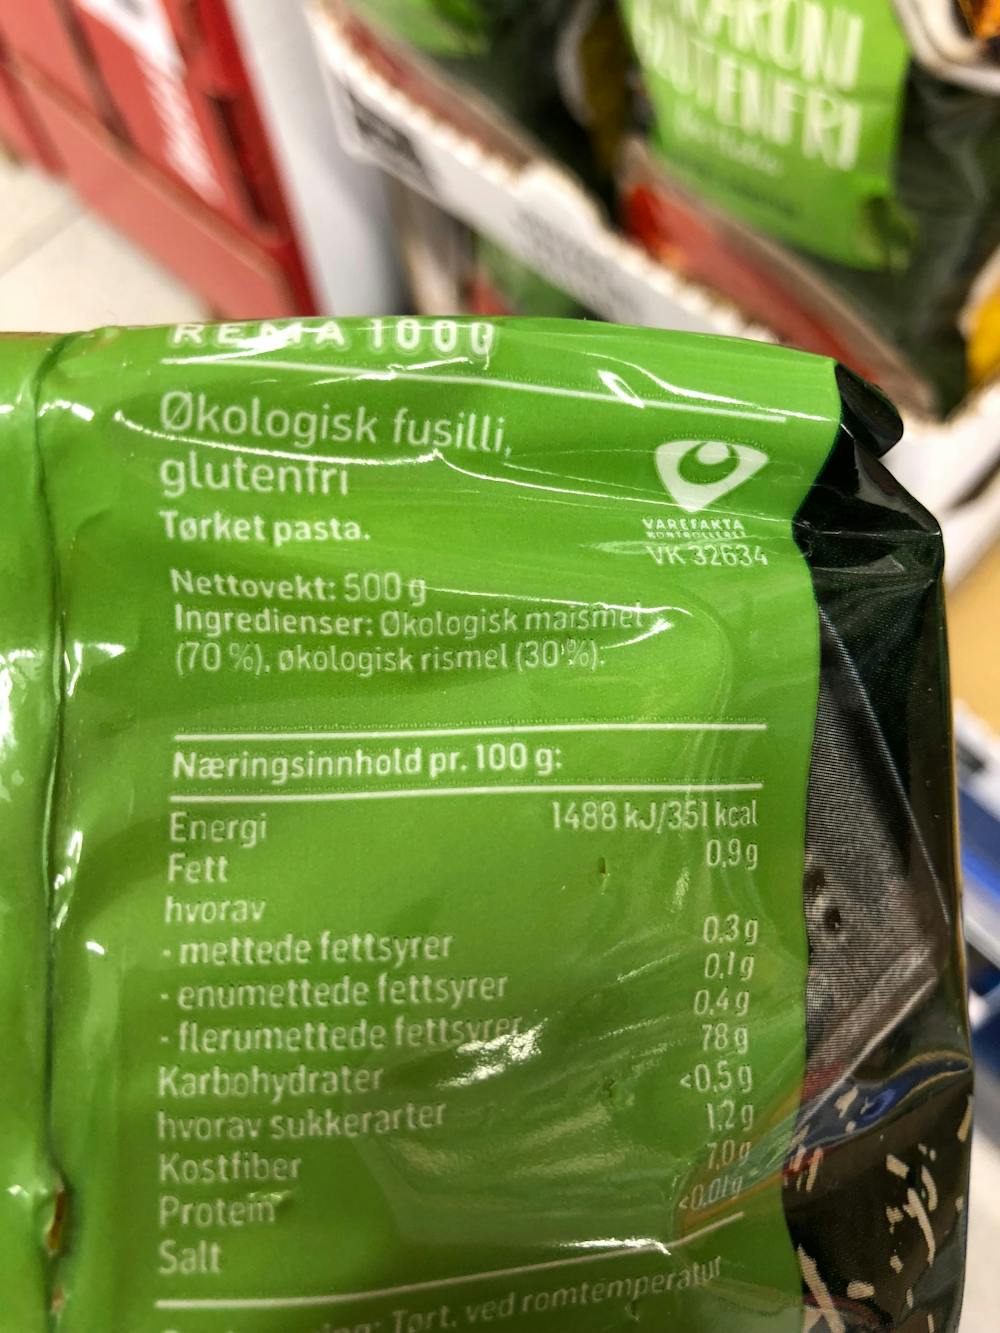 Ingredienslisten til Rema 1000 üten Økologisk fusilli glutenfri